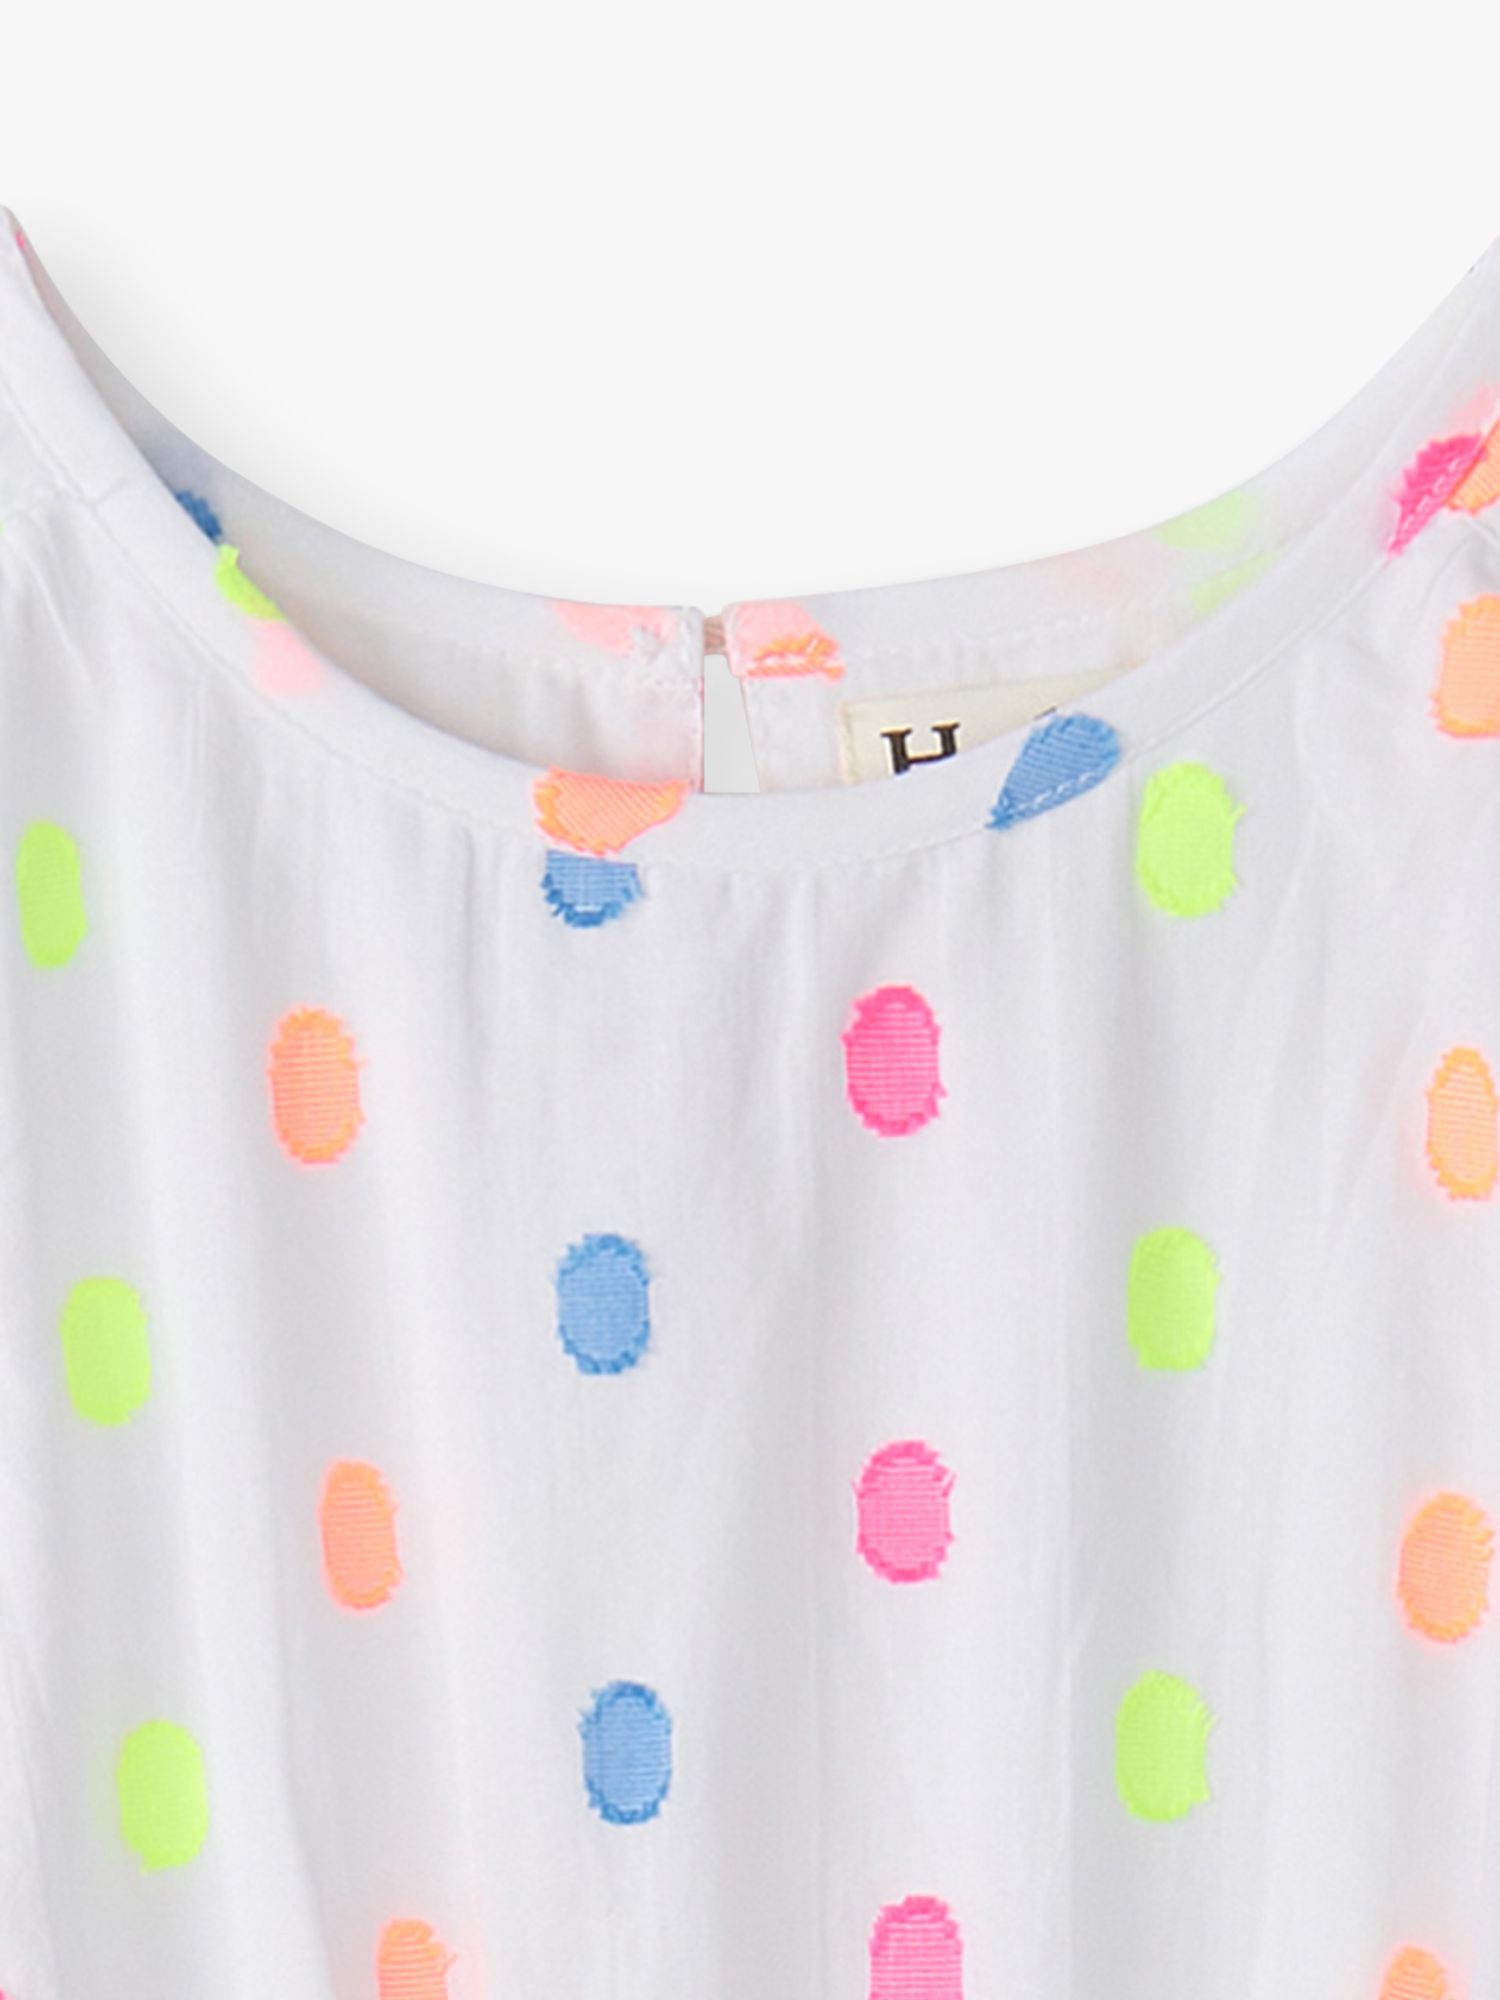 Buy Hatley Kids' Summer Dots Play Dress, White/Multi Online at johnlewis.com